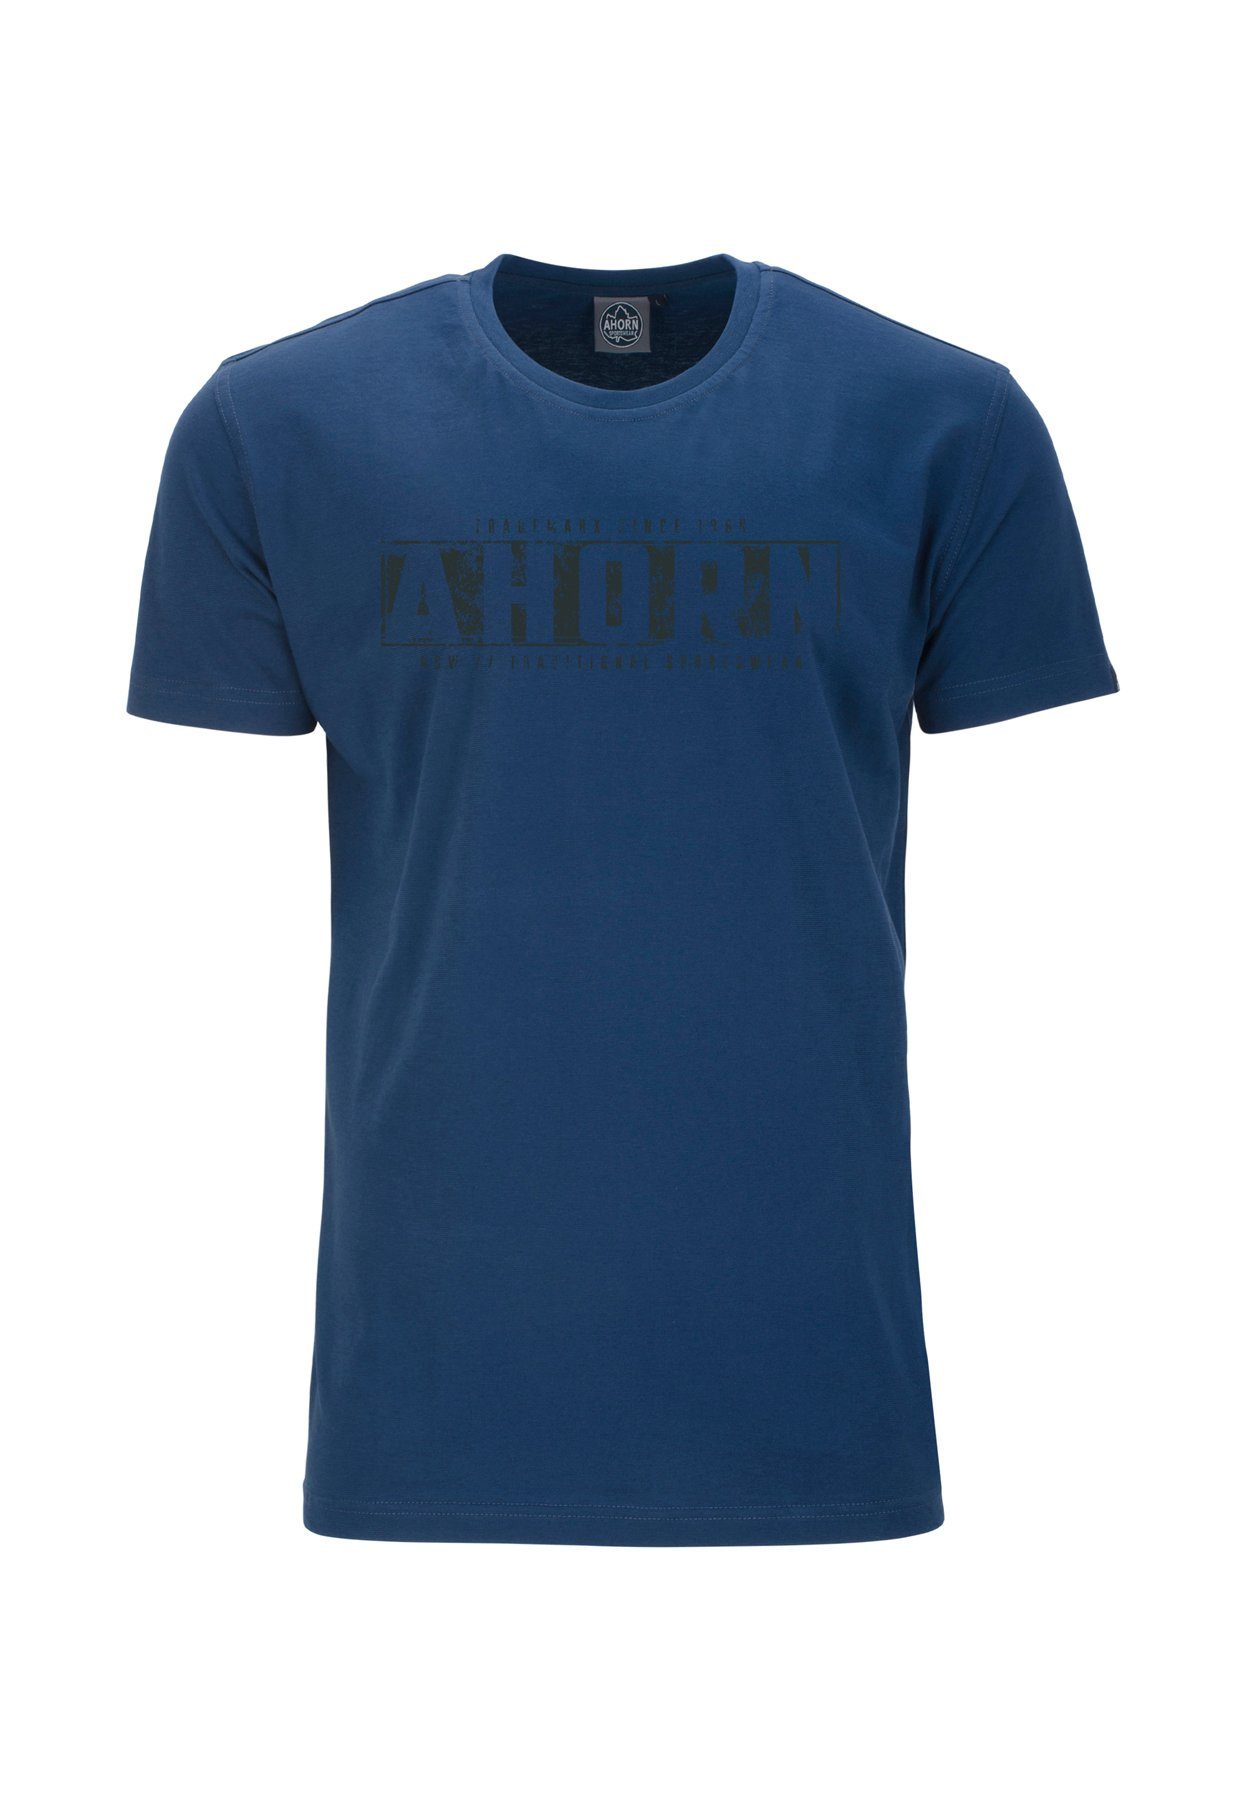 AHORN SPORTSWEAR T-Shirt TRADITIONAL_vulcan grey mit modischem Frontprint blau